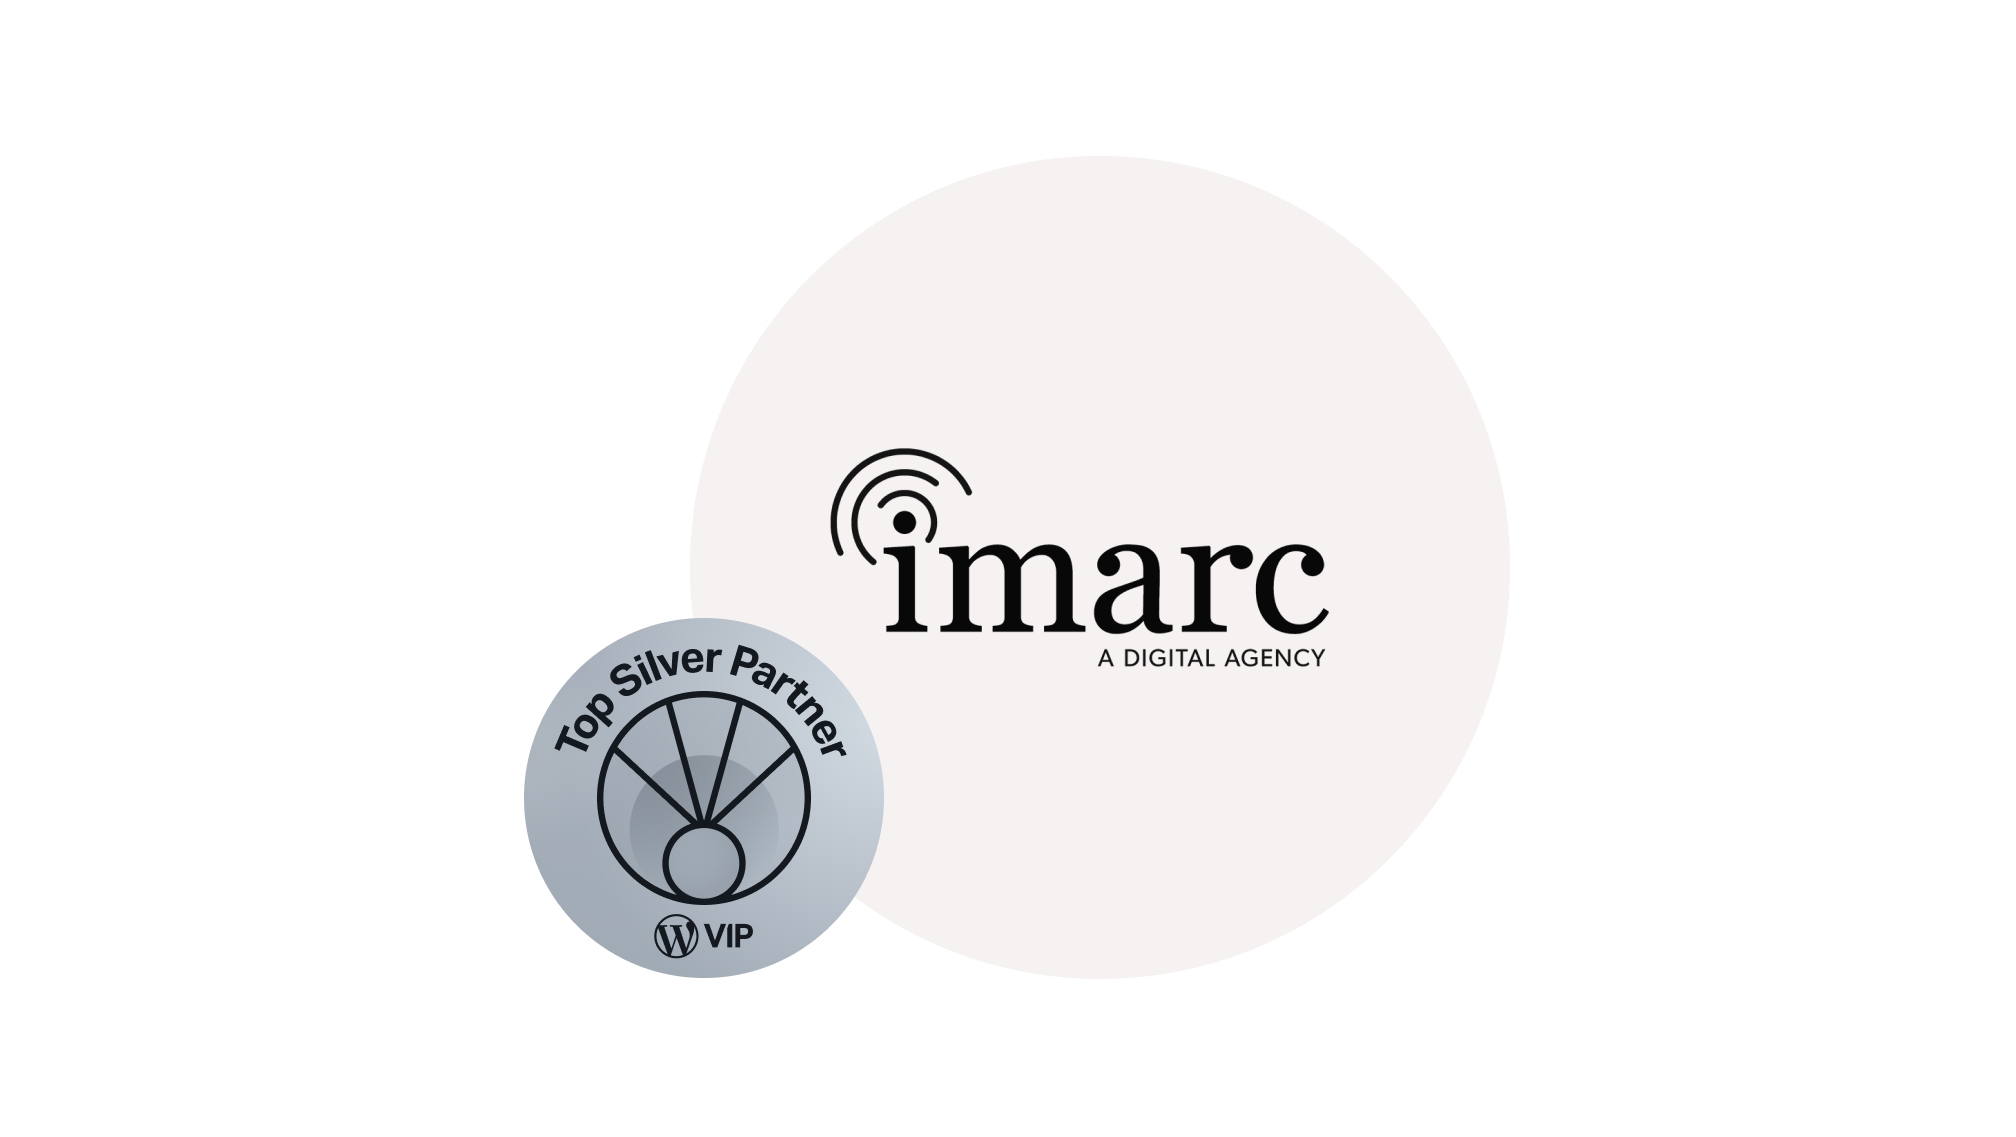 Top Silver Partner award for imarc